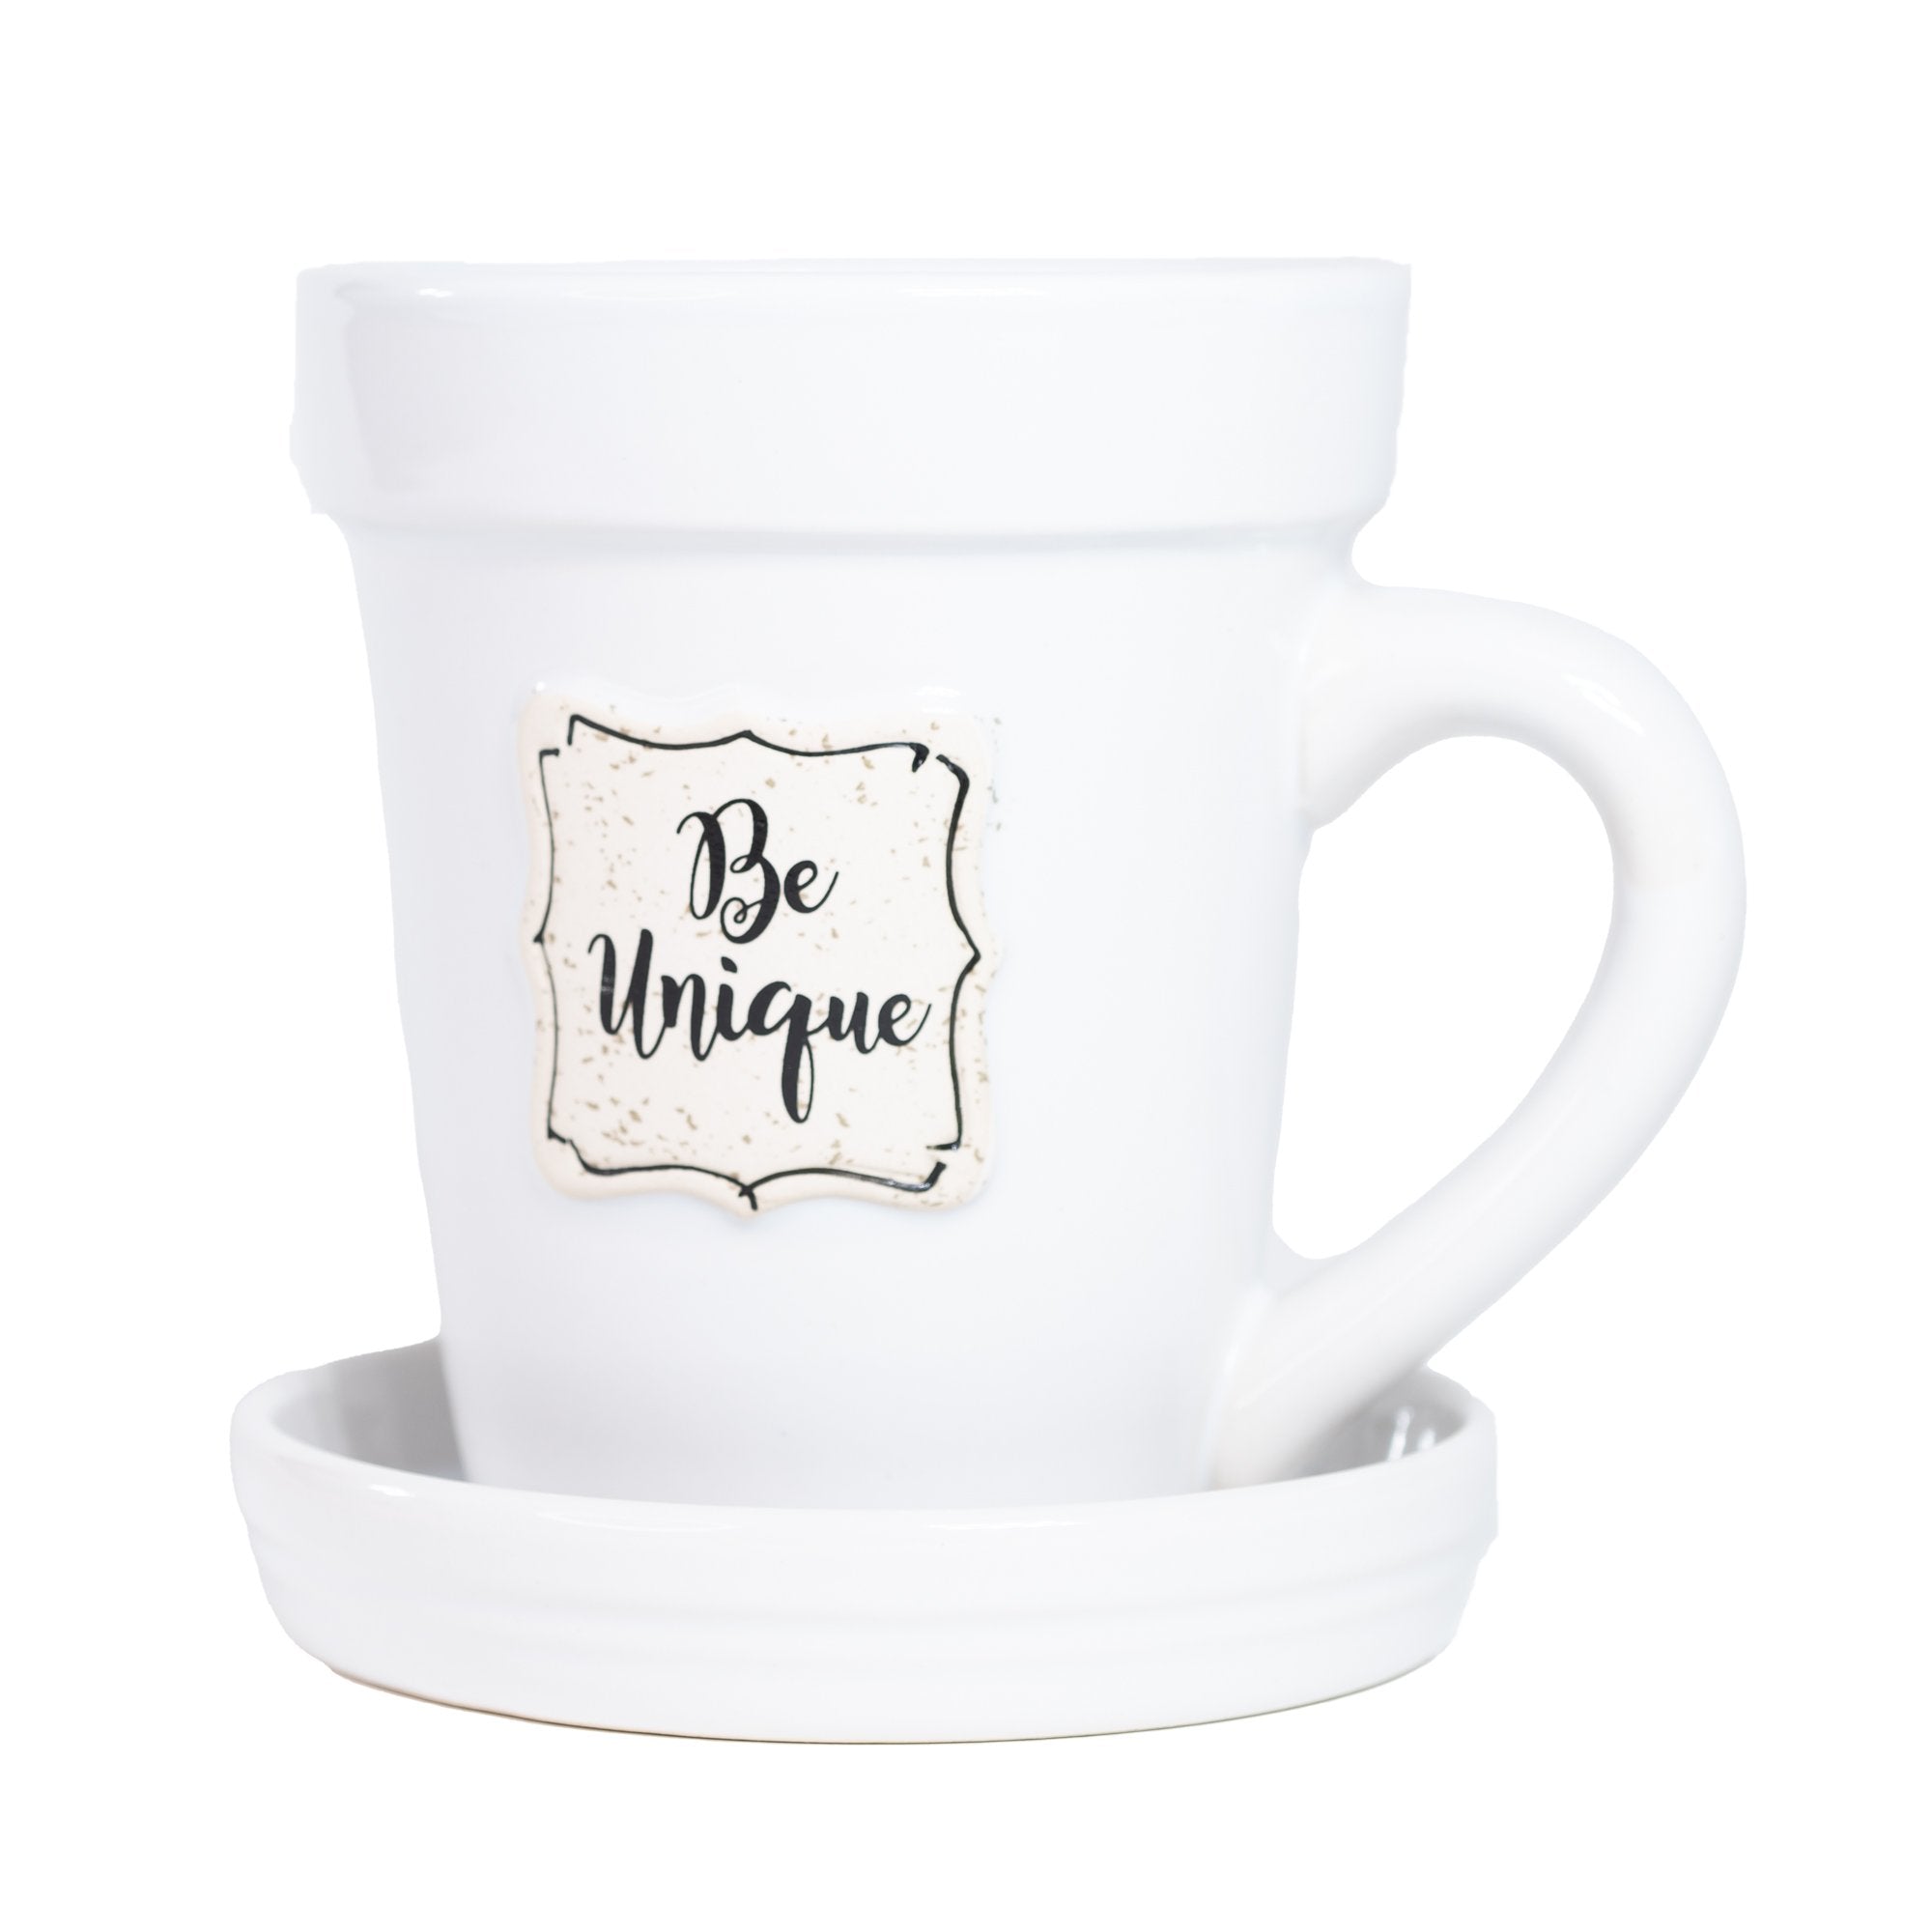 White Flower Pot Mug - "Be Unique"